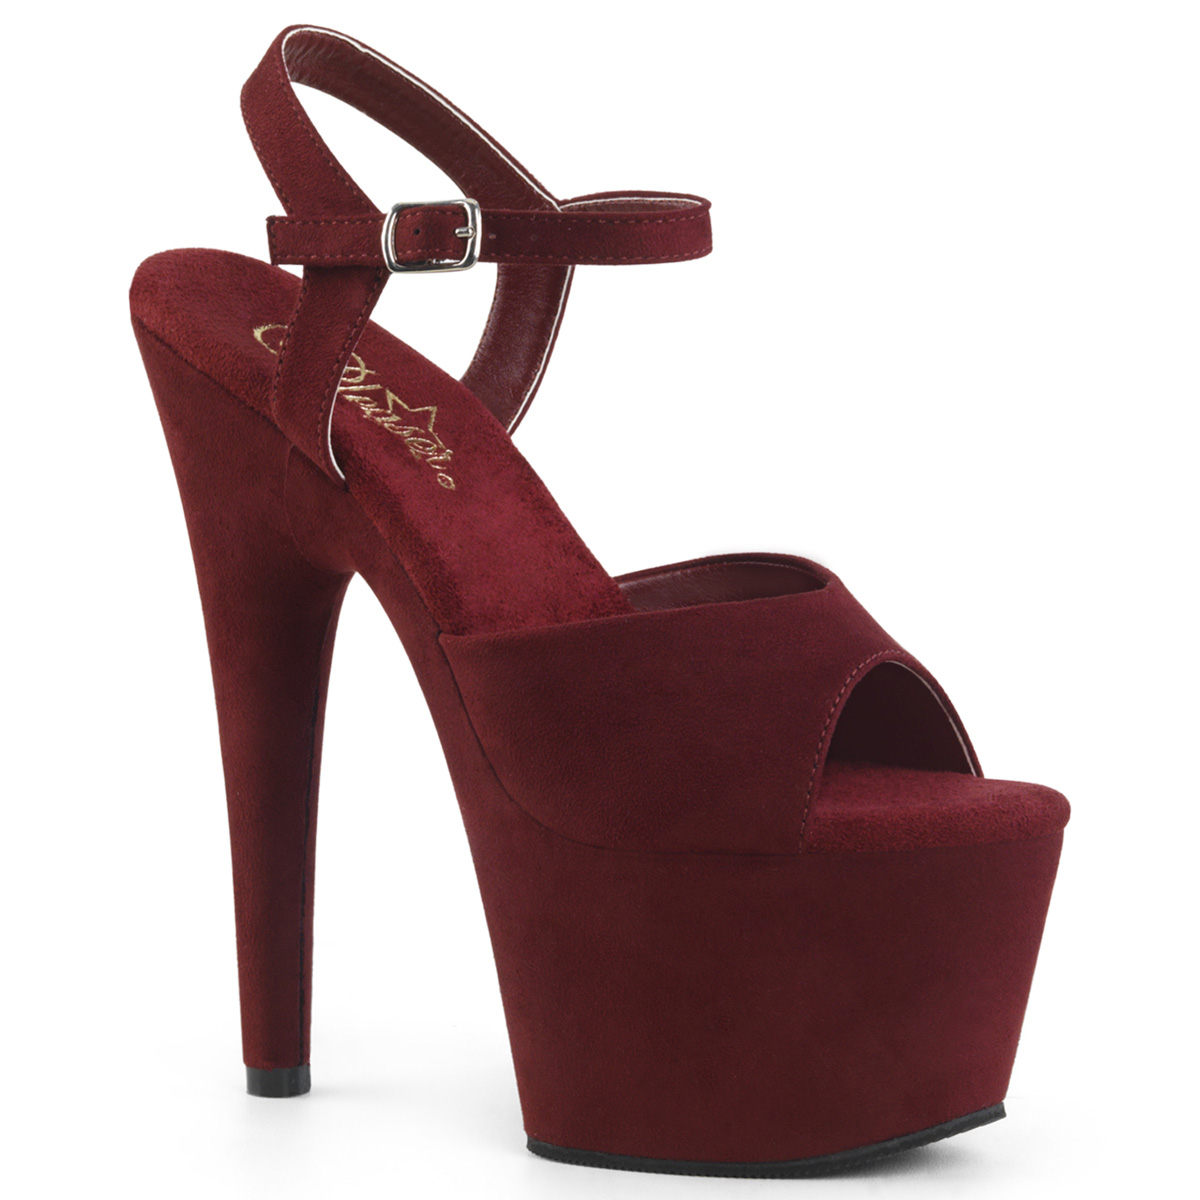 Pleaser Adore 709fs Series7 Heel Ankle Strap Sandal Ebay 